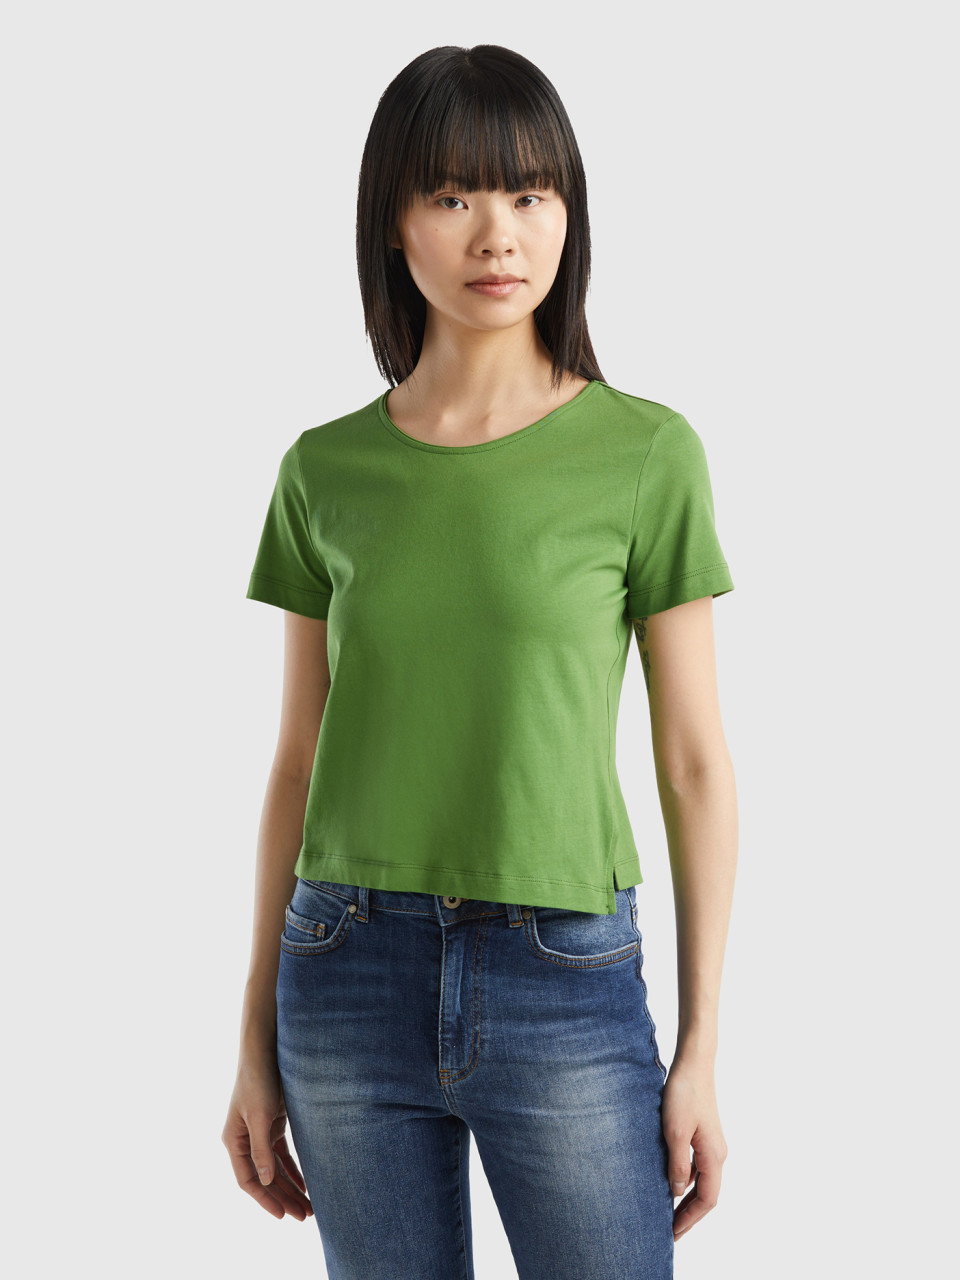 Benetton, Short Sleeve T-shirt With Slit, Military Green, Women